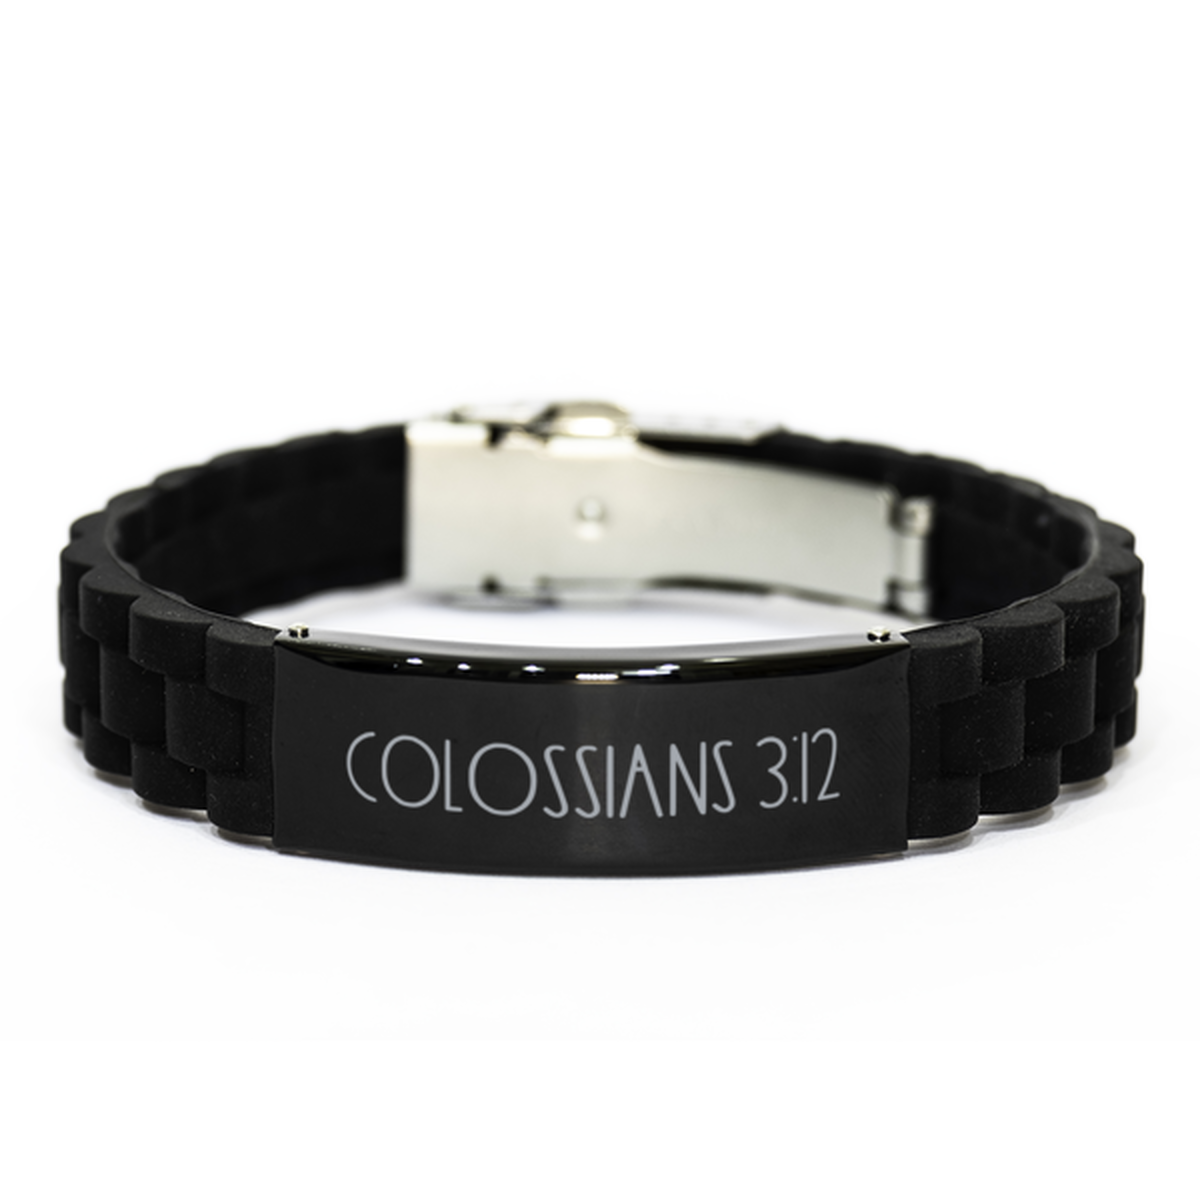 Bible Verse Bracelet, Colossians 3 12 Bracelet, Christian Bracelet, Christian Birthday Gift, Black Stainless Steel Silicone Bracelet, Gift for Christian.